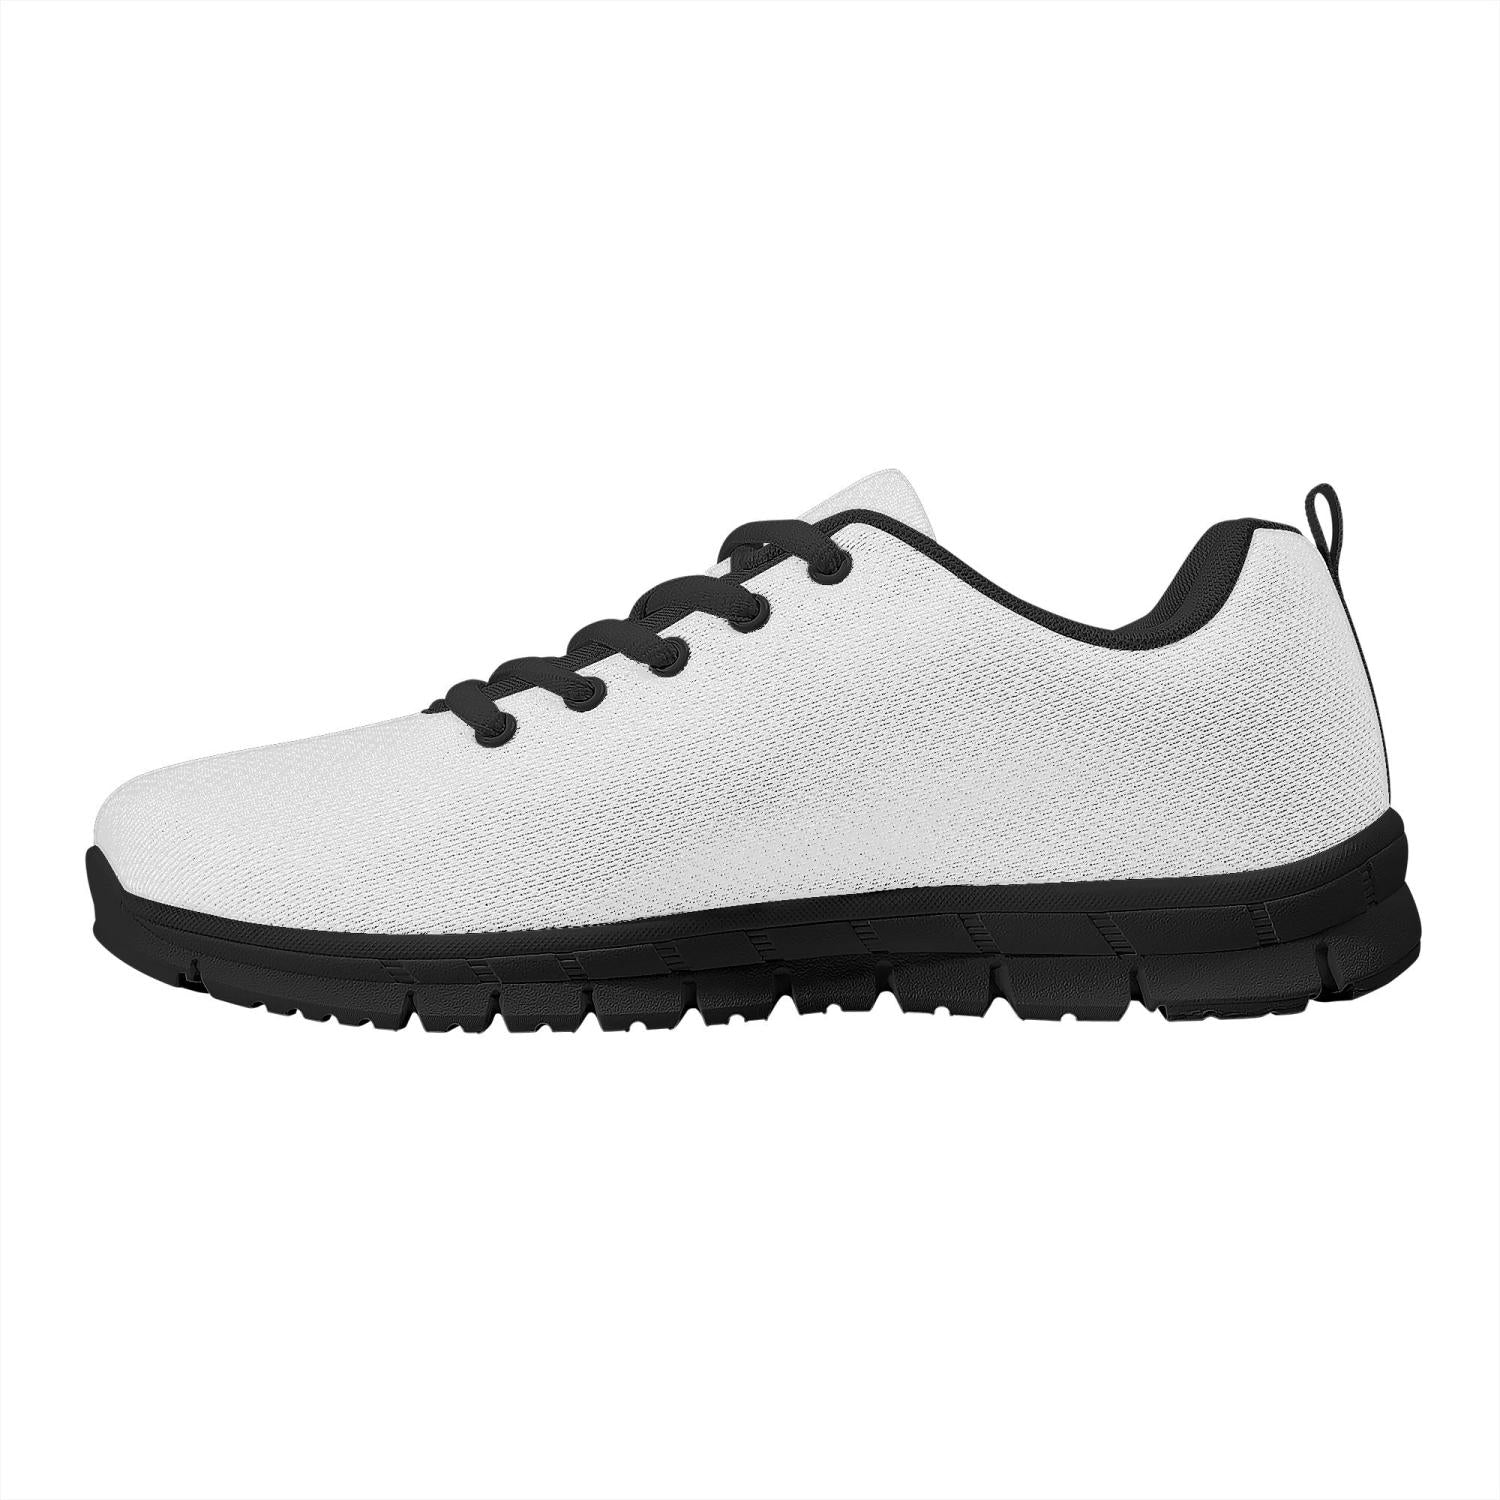 177. Classic Lightweight Mesh Sneakers - White/Black